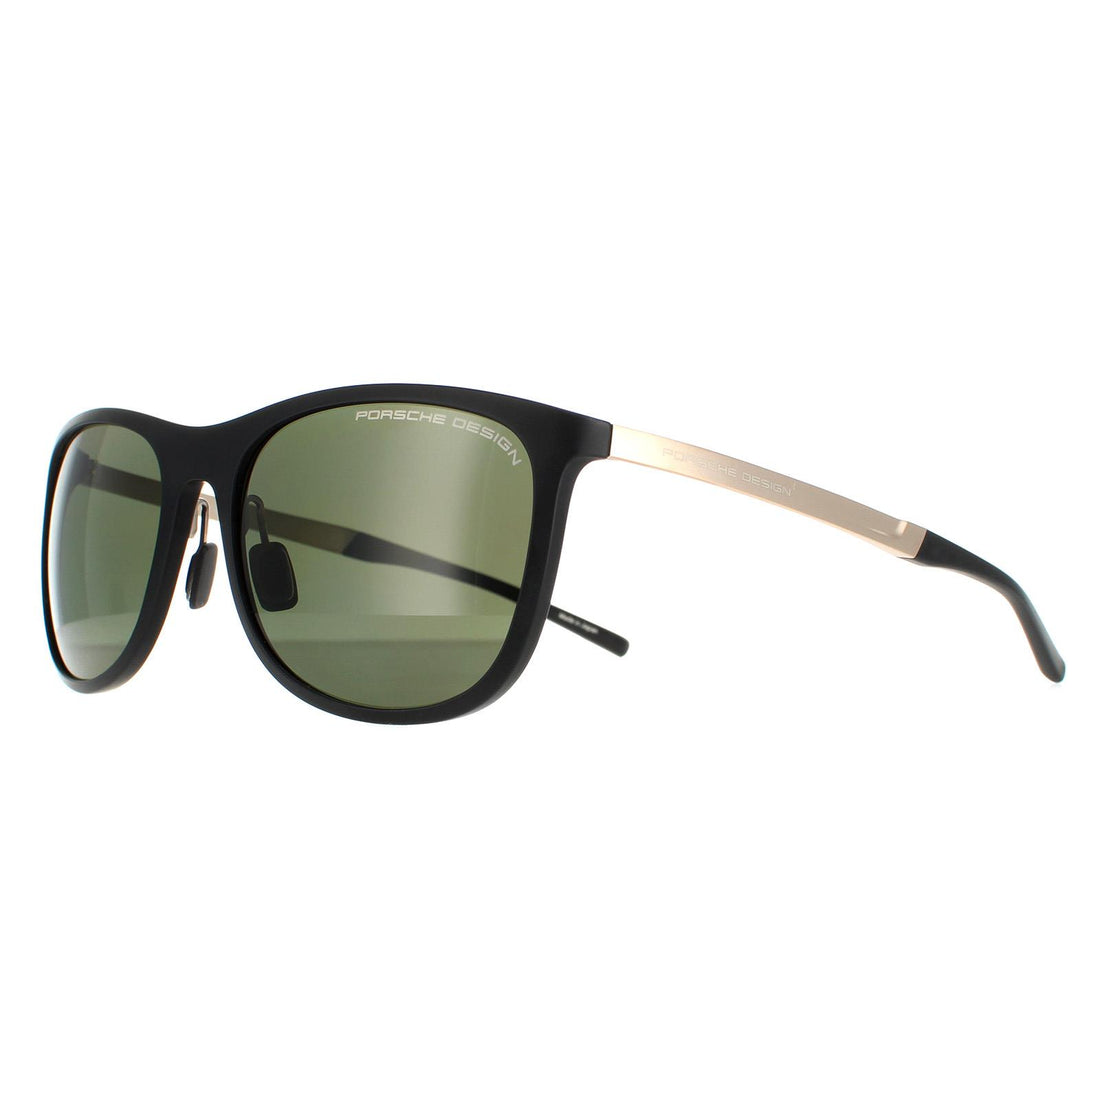 Porsche Design Sunglasses P8672 C Black Gold Green Grey Polarized